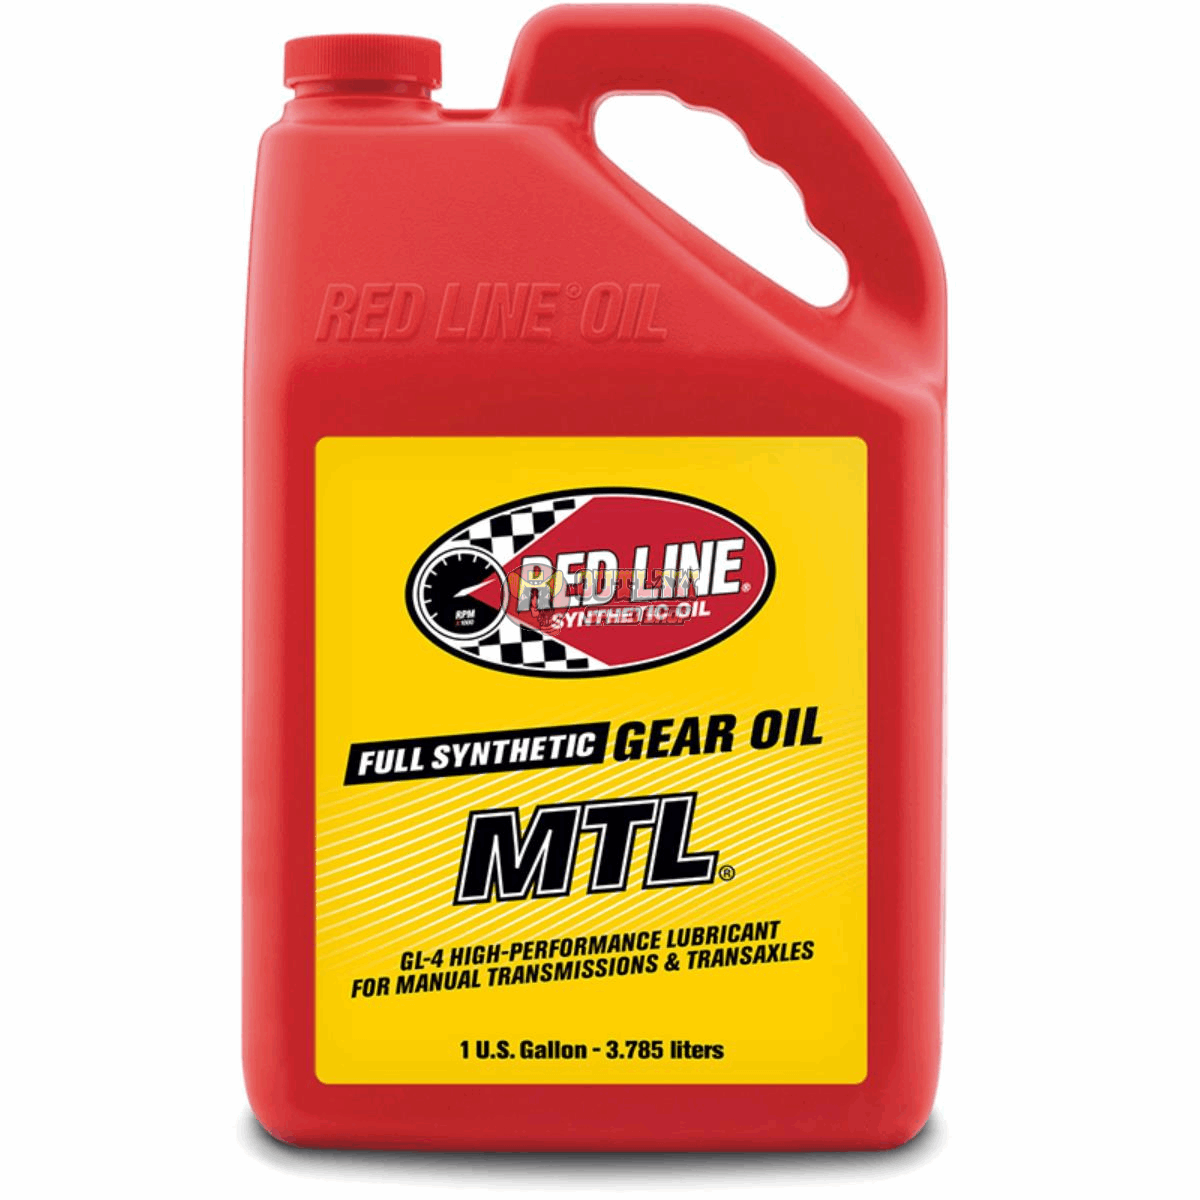 High Red Line Oil Logo - RED50205 - REDLINE OIL MTL 75W80 GL-4 GEAR OIL 1 GALLON (3.785 LITRES)